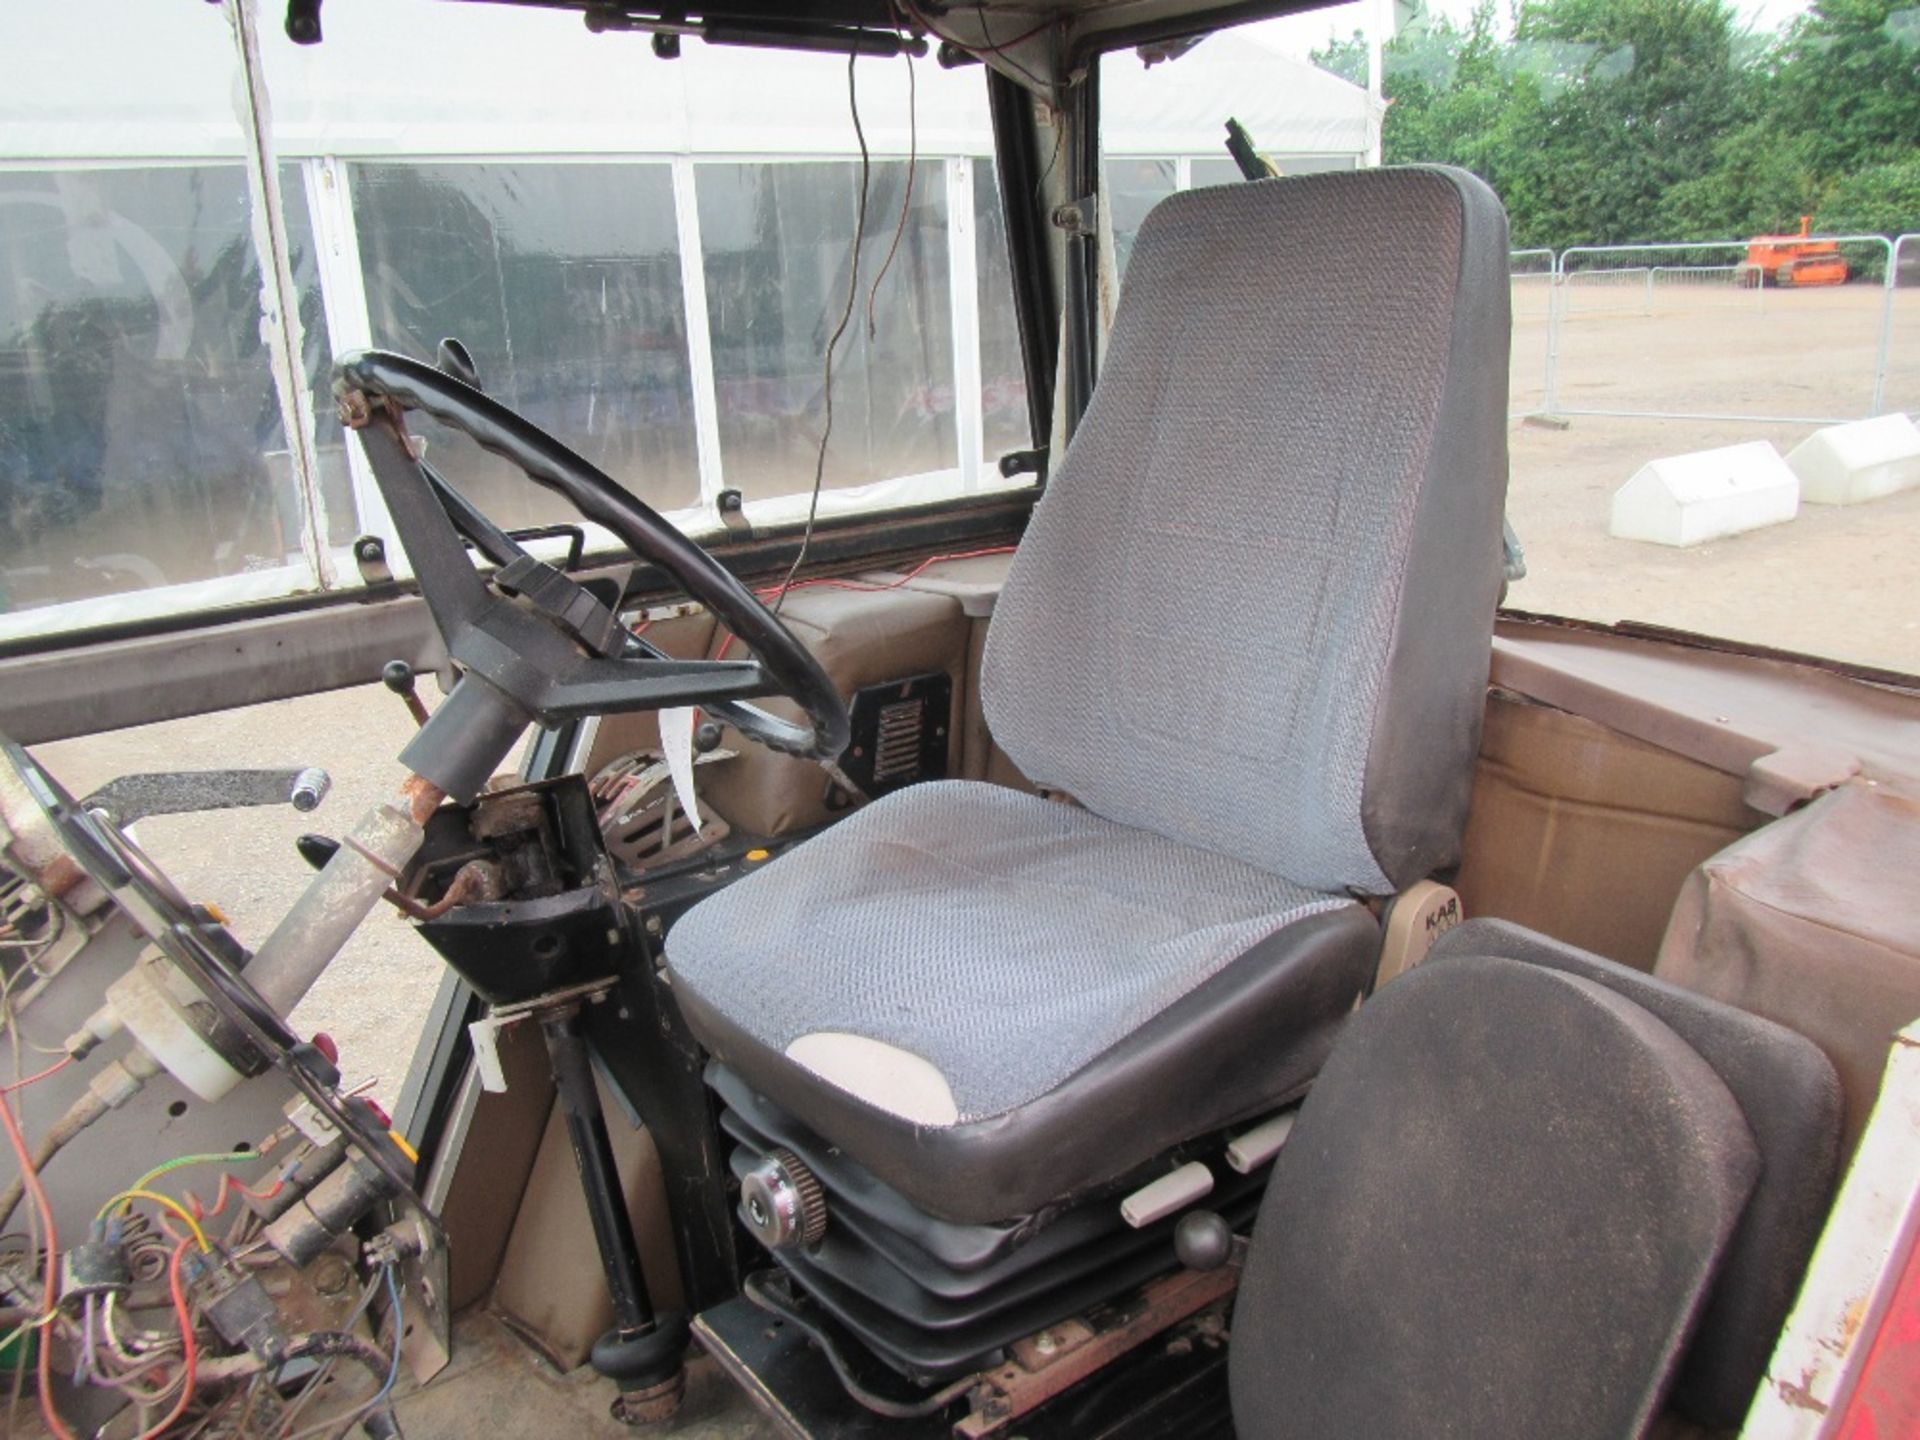 Massey Ferguson 2685 4wd Tractor c/w manual shuttle, 20.8 R38 & 16.9 R28 Hours: 4917 - Image 12 of 15